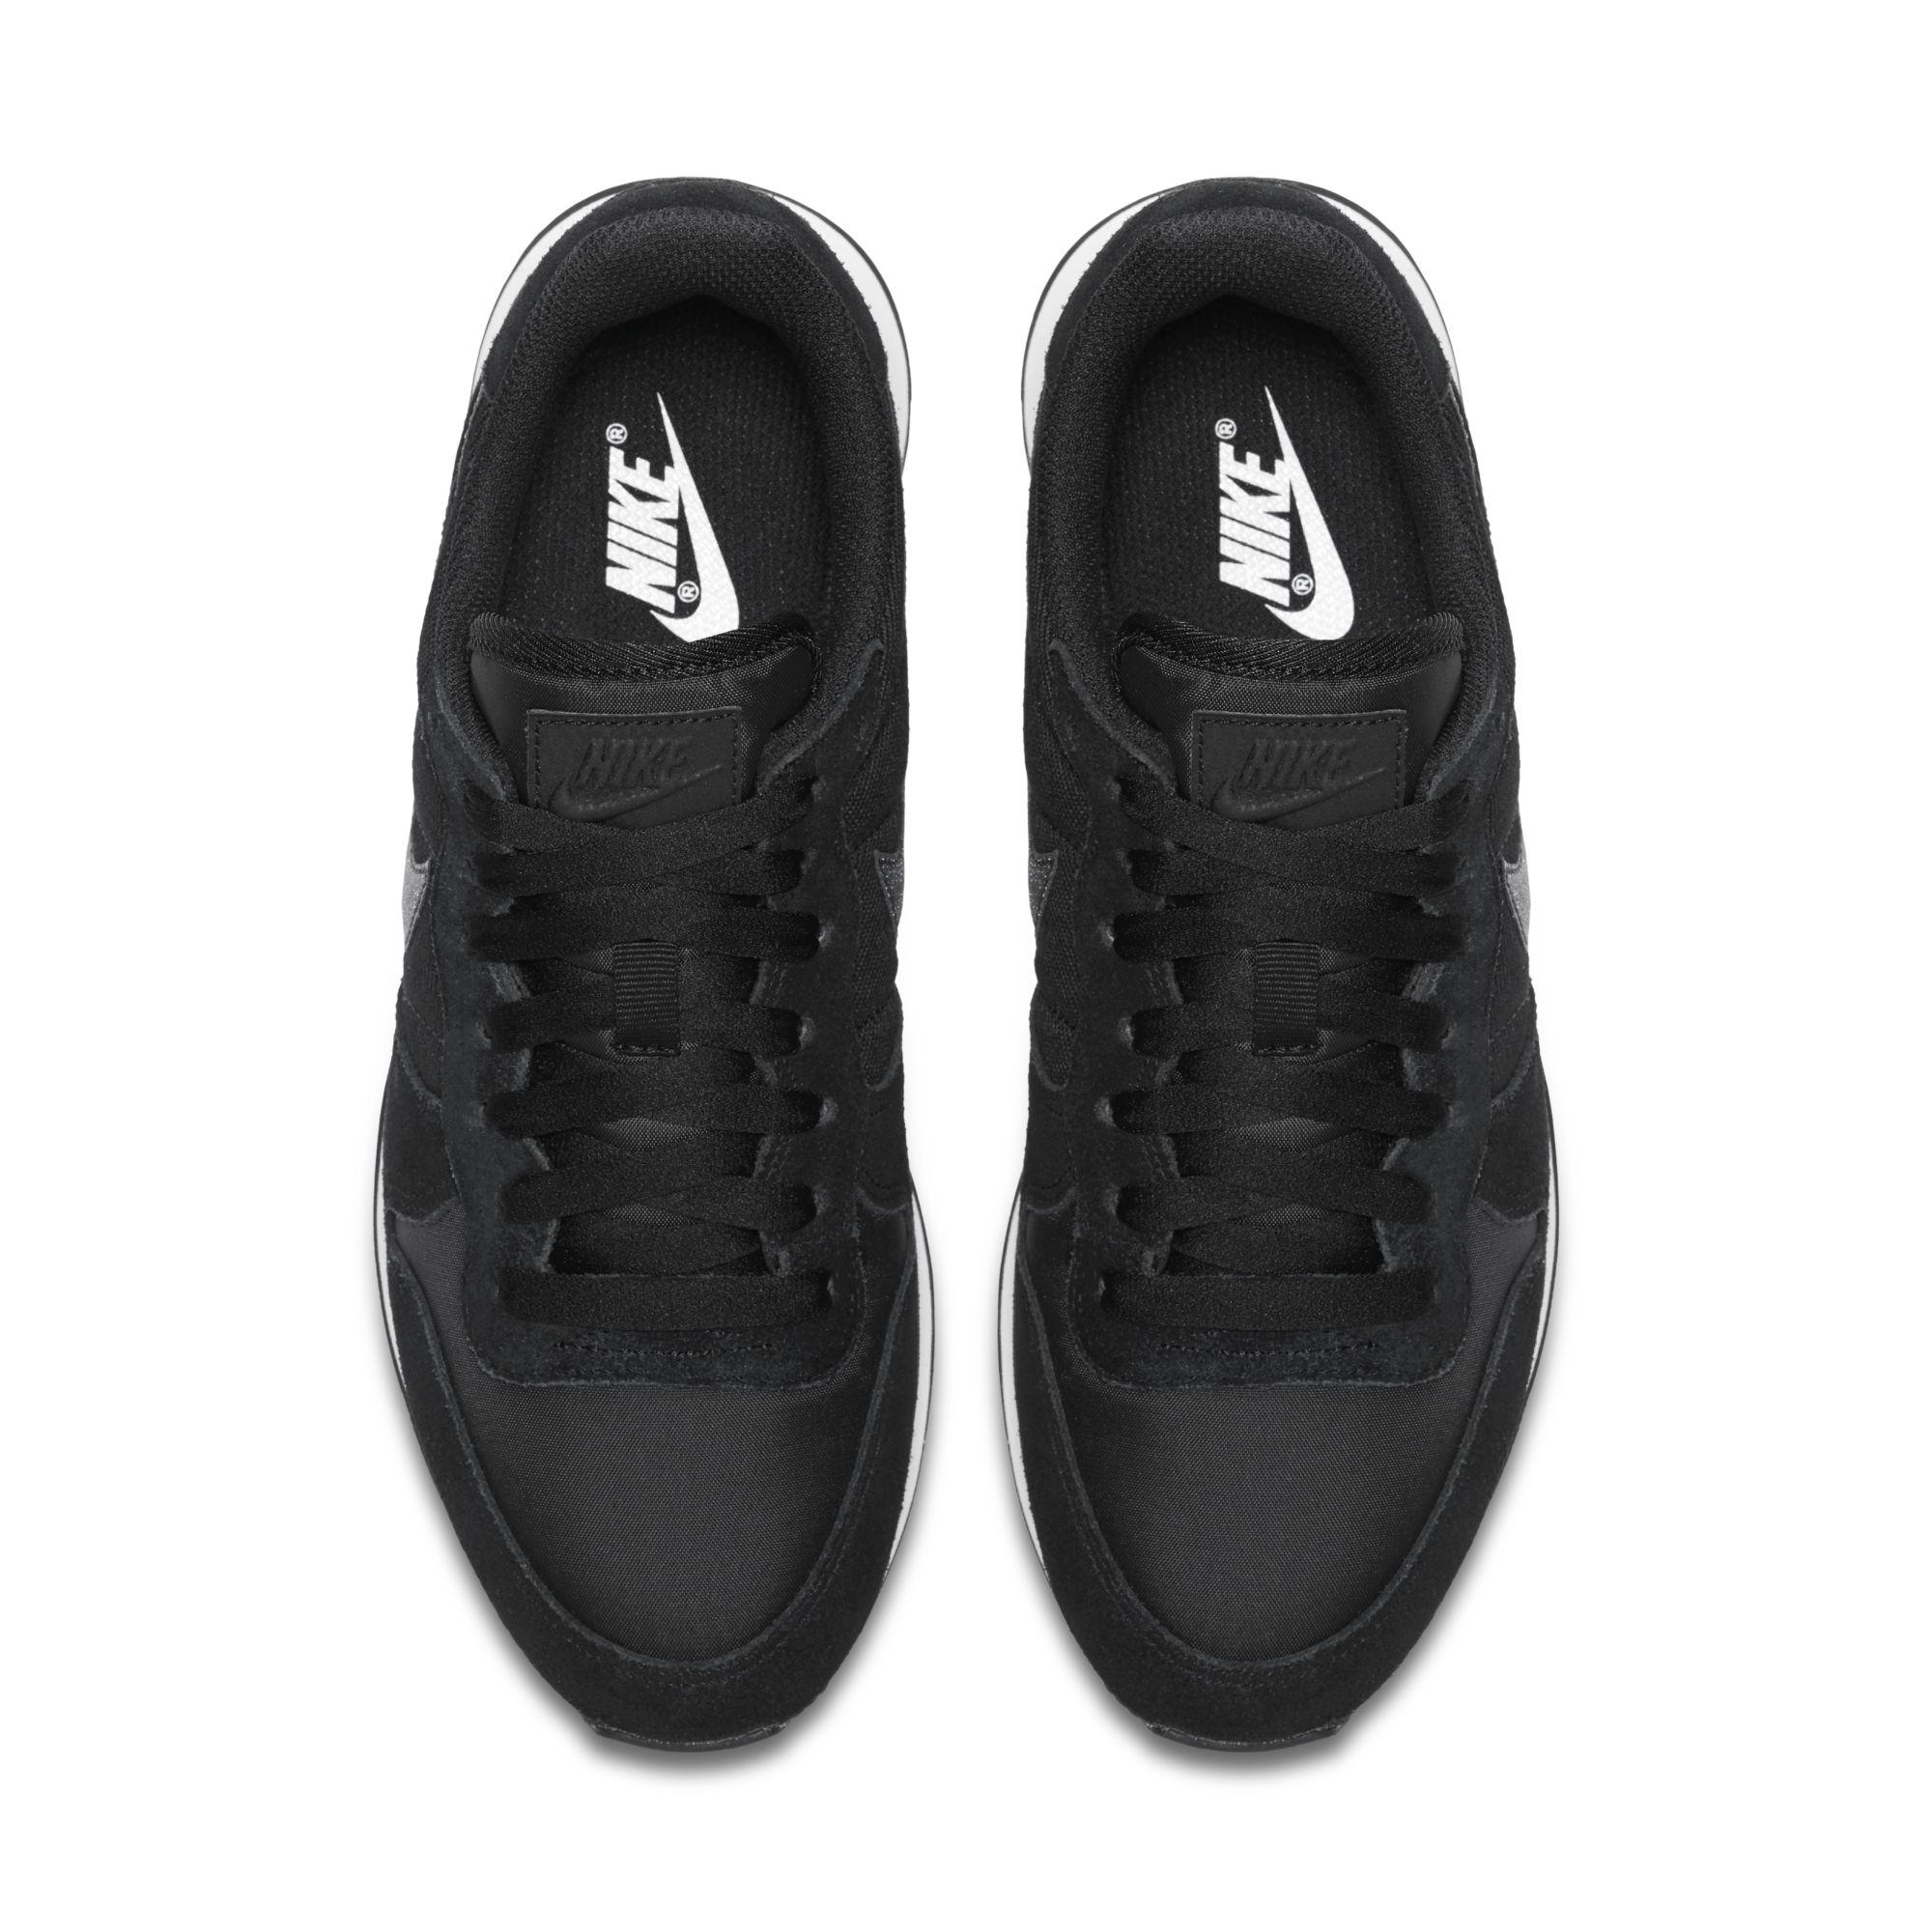 Nike Internationalist Glitter Shoe Black | Lyst Australia